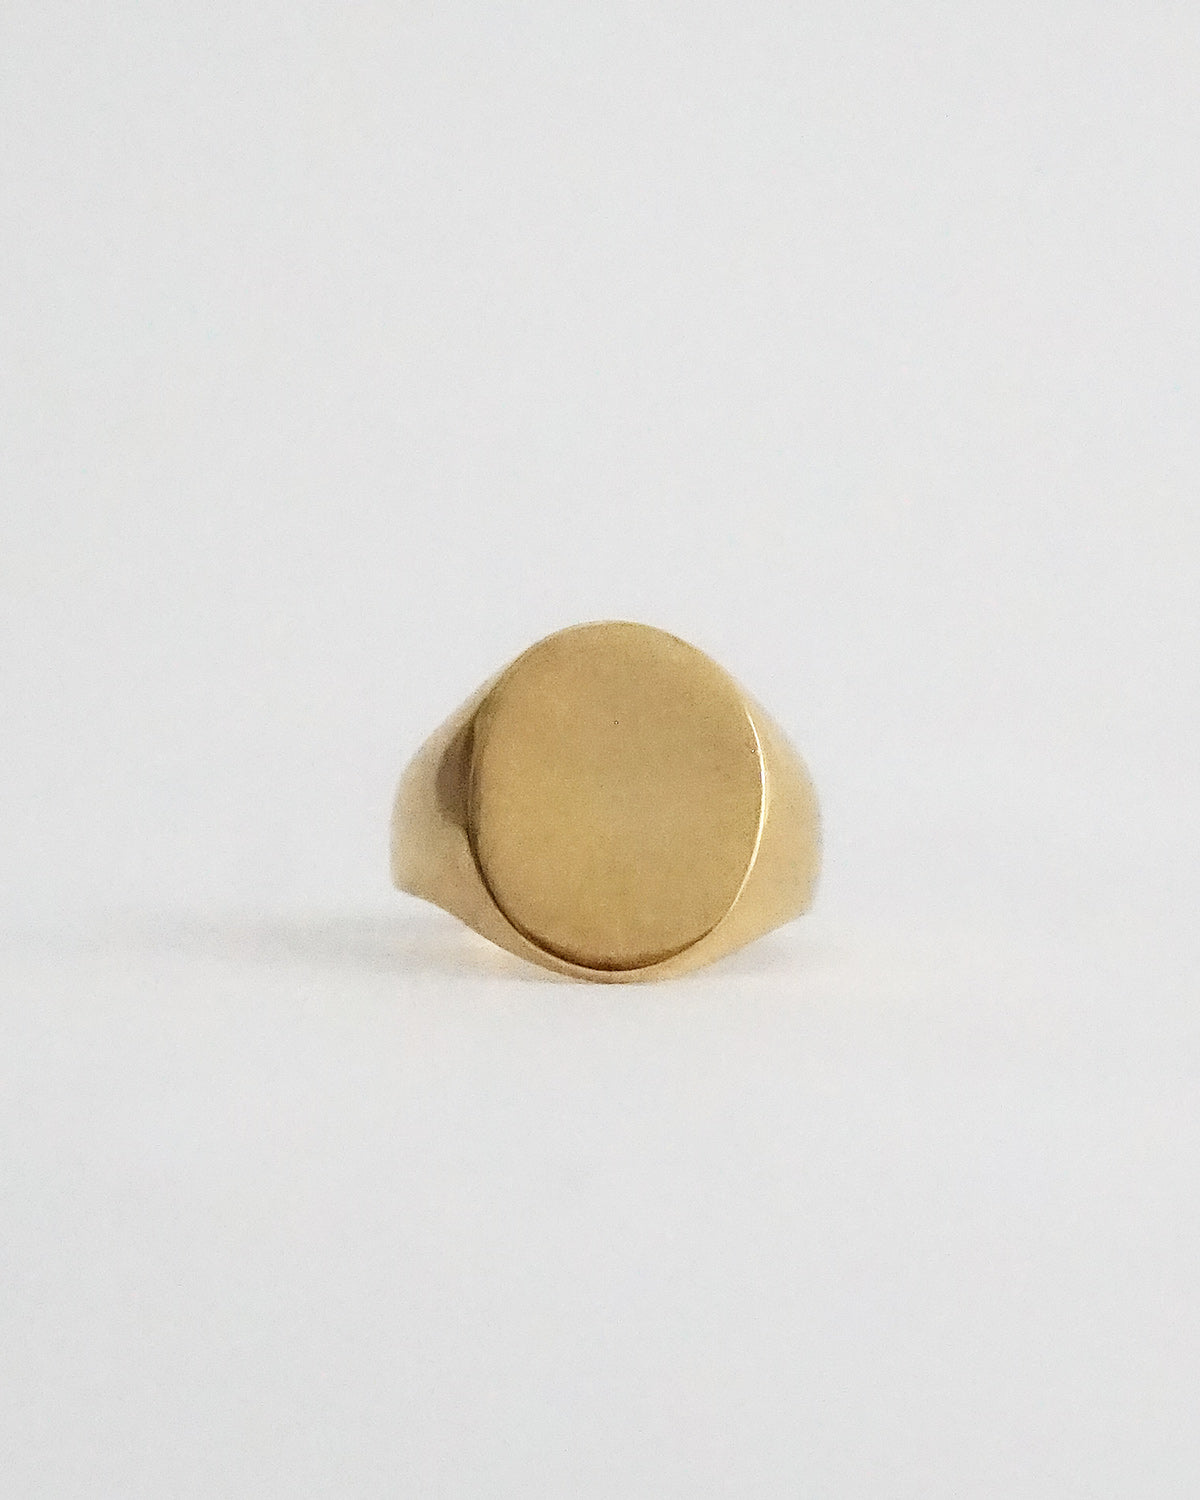 14k Gold Signet Ring / size: 9.5